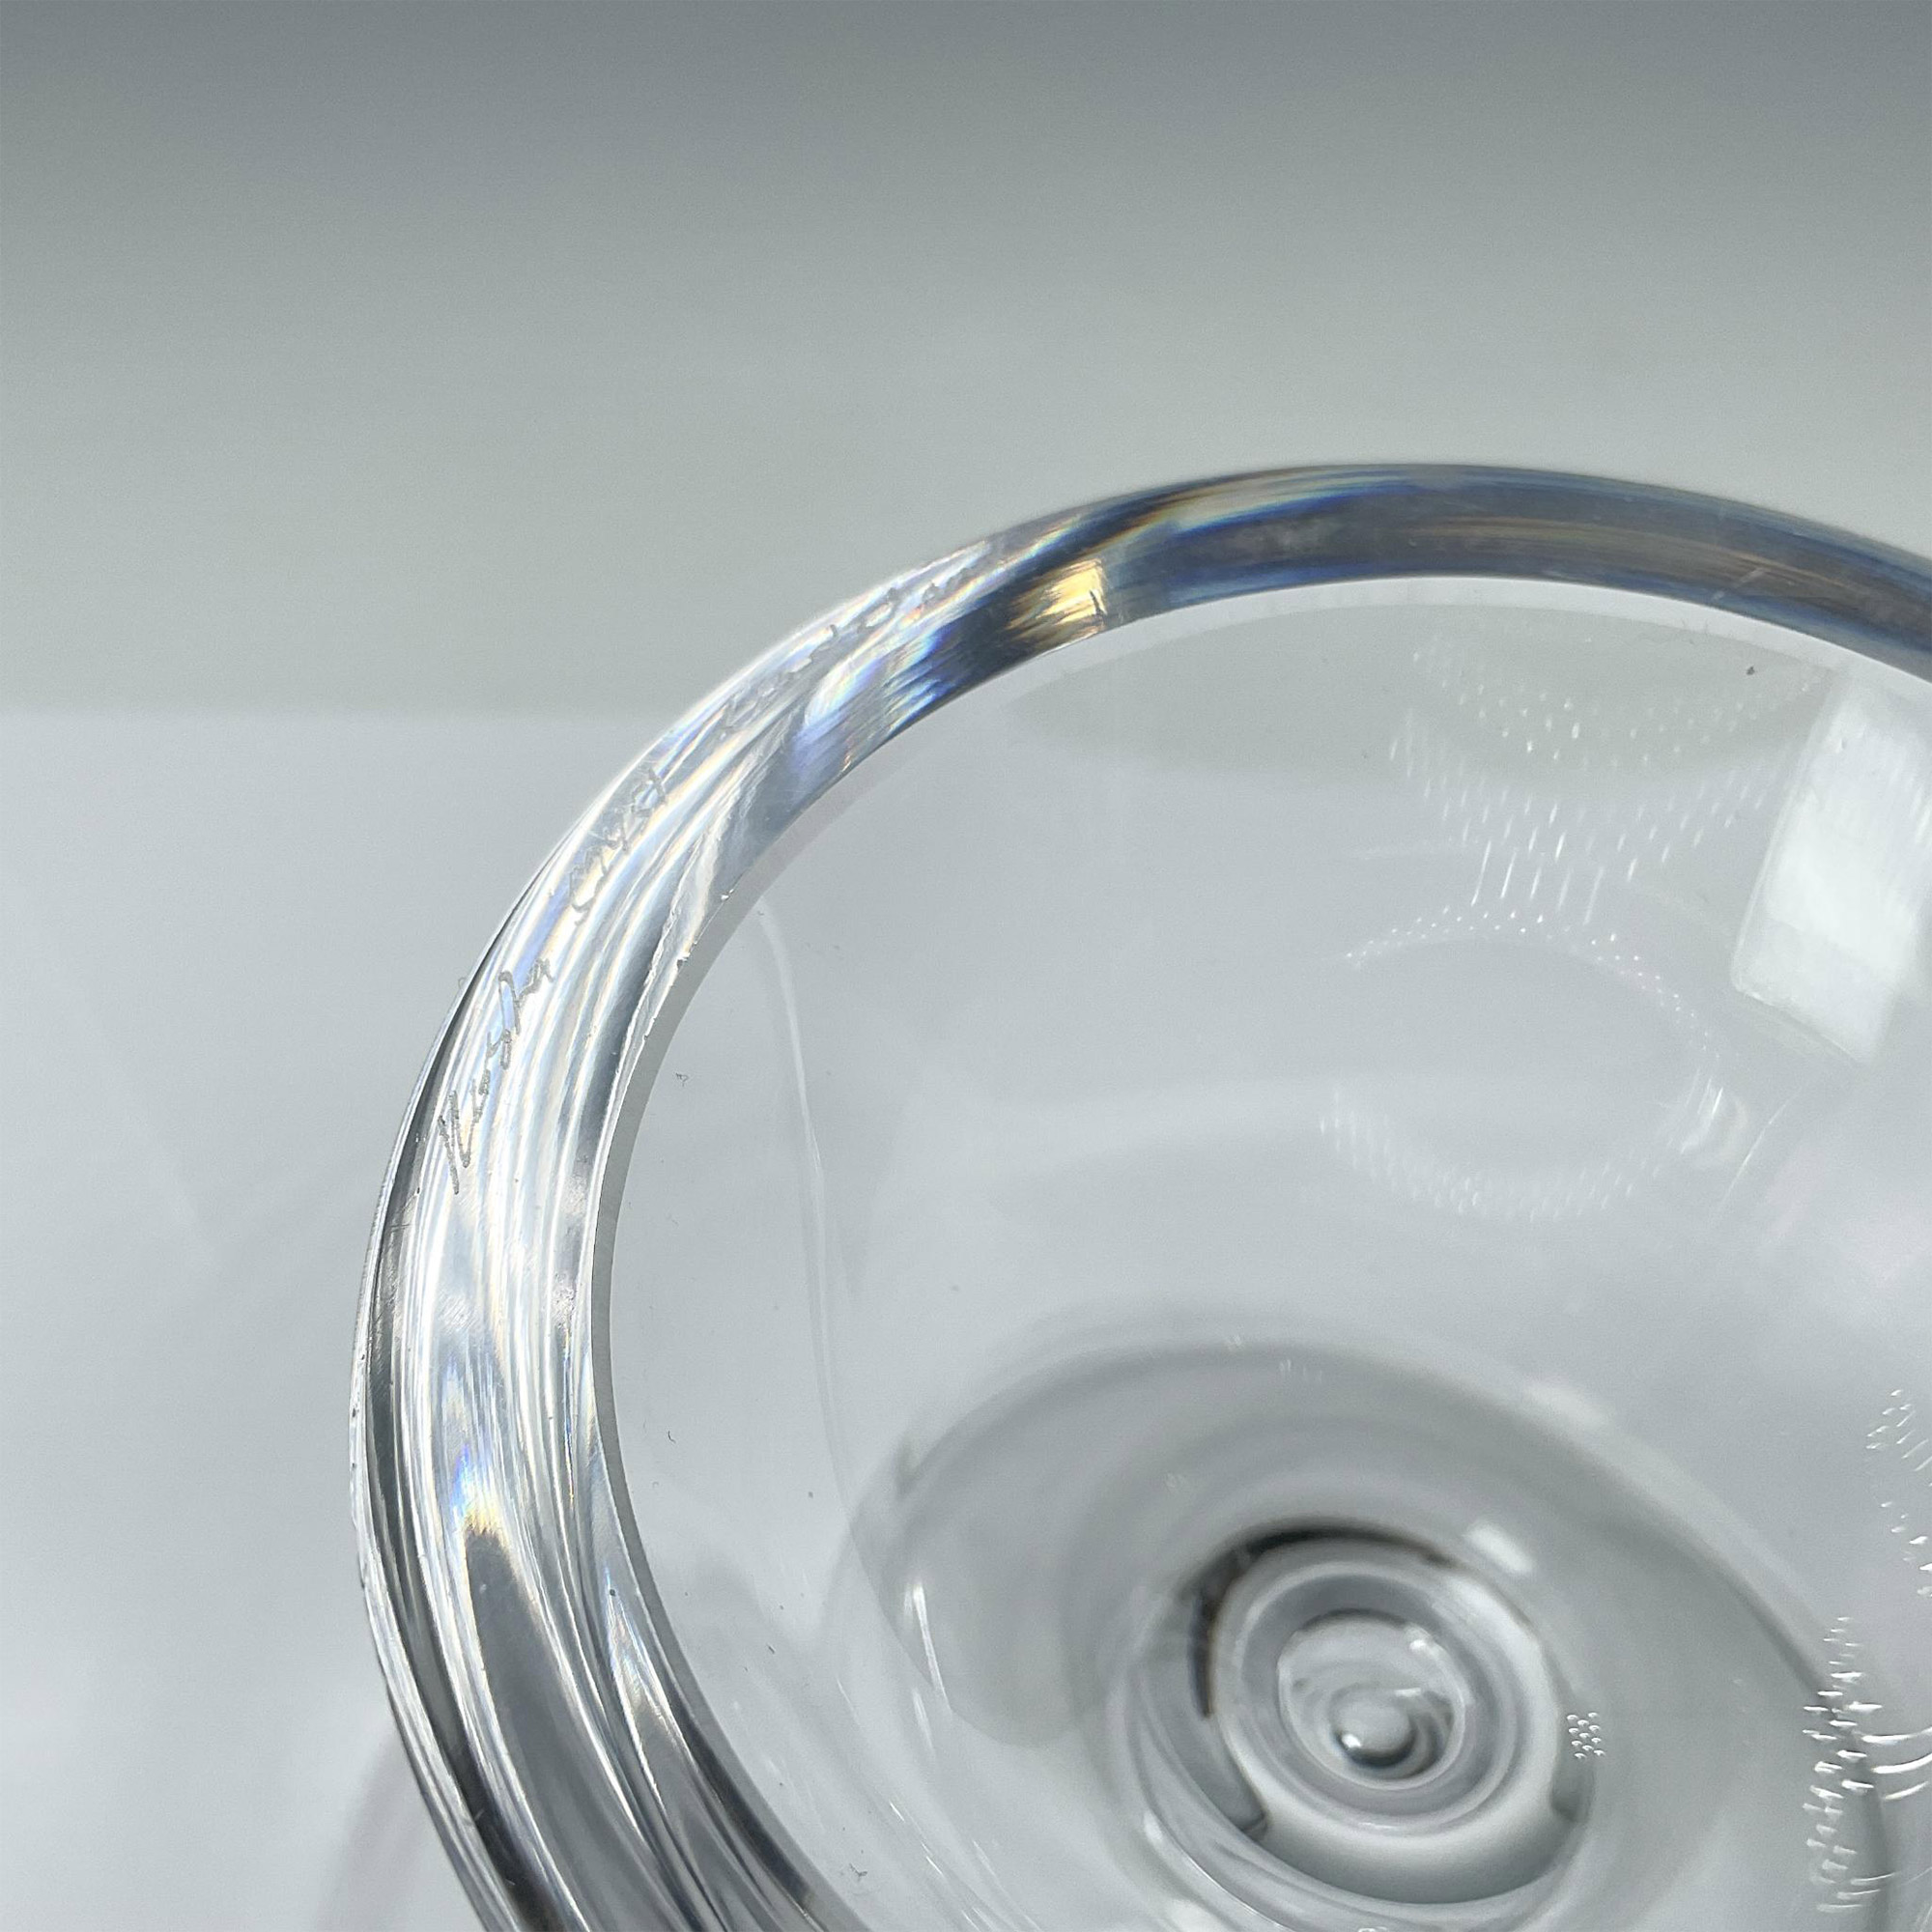 Kosta Boda by Vicke Lindstrand Art Glass Vase/Bowl - Image 4 of 4